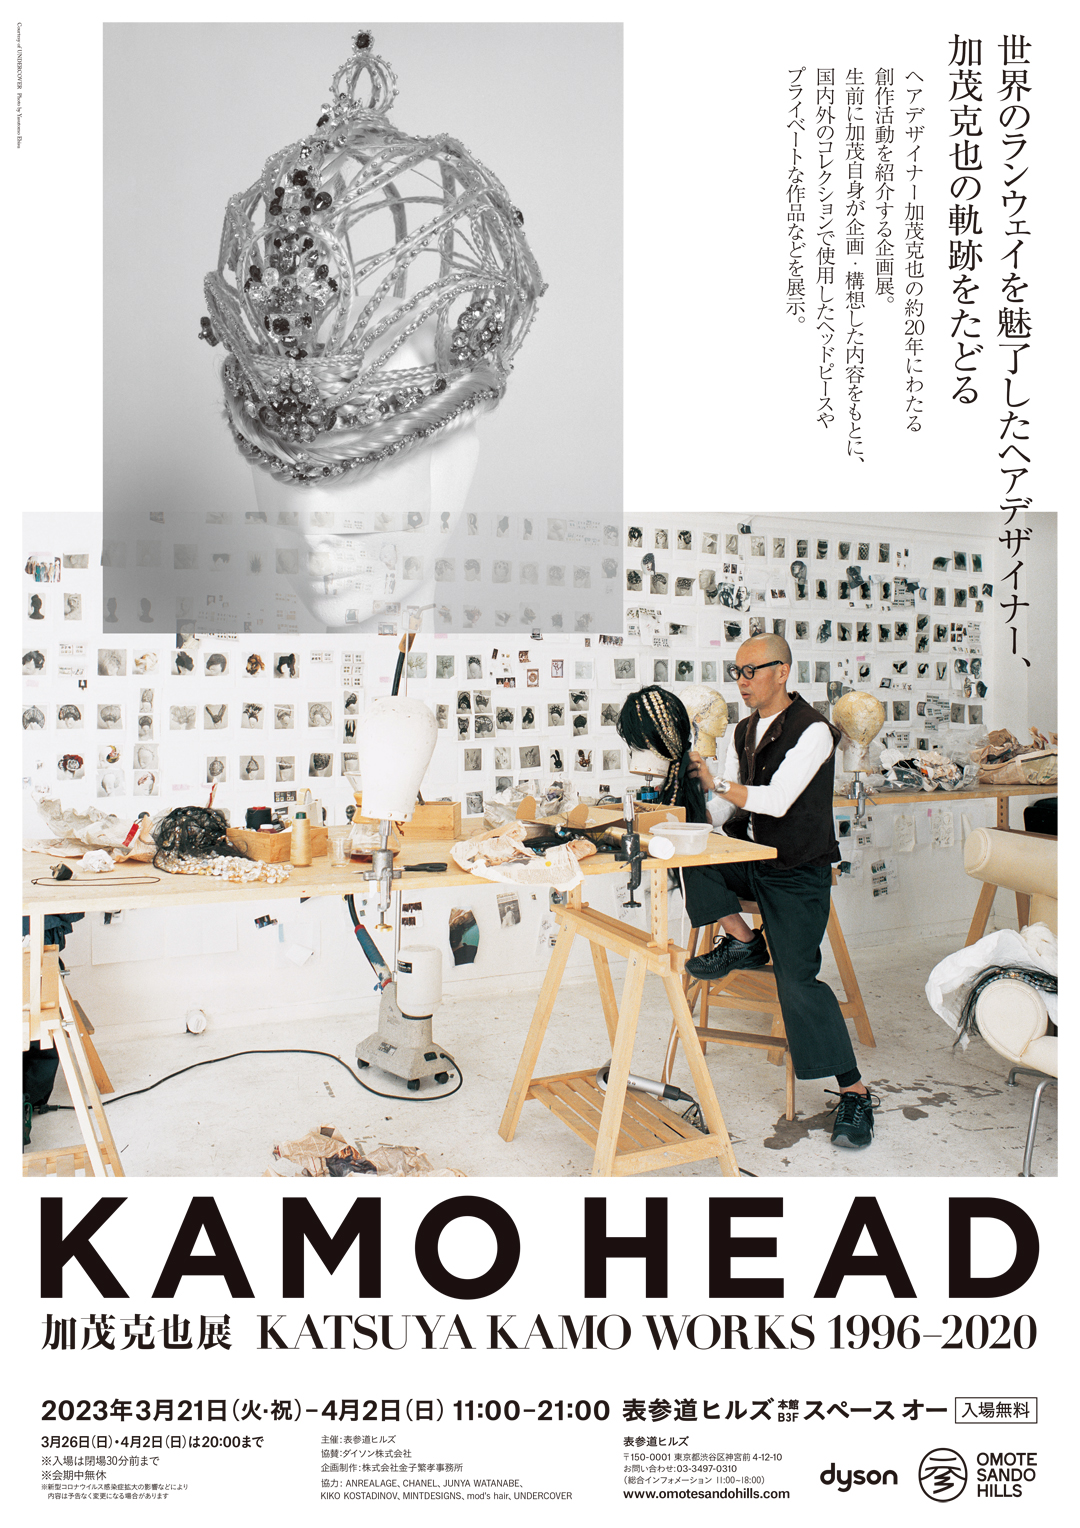 Kamo Head - Katsuya Kamo Works 1996-2020 （Space O in Omotesando